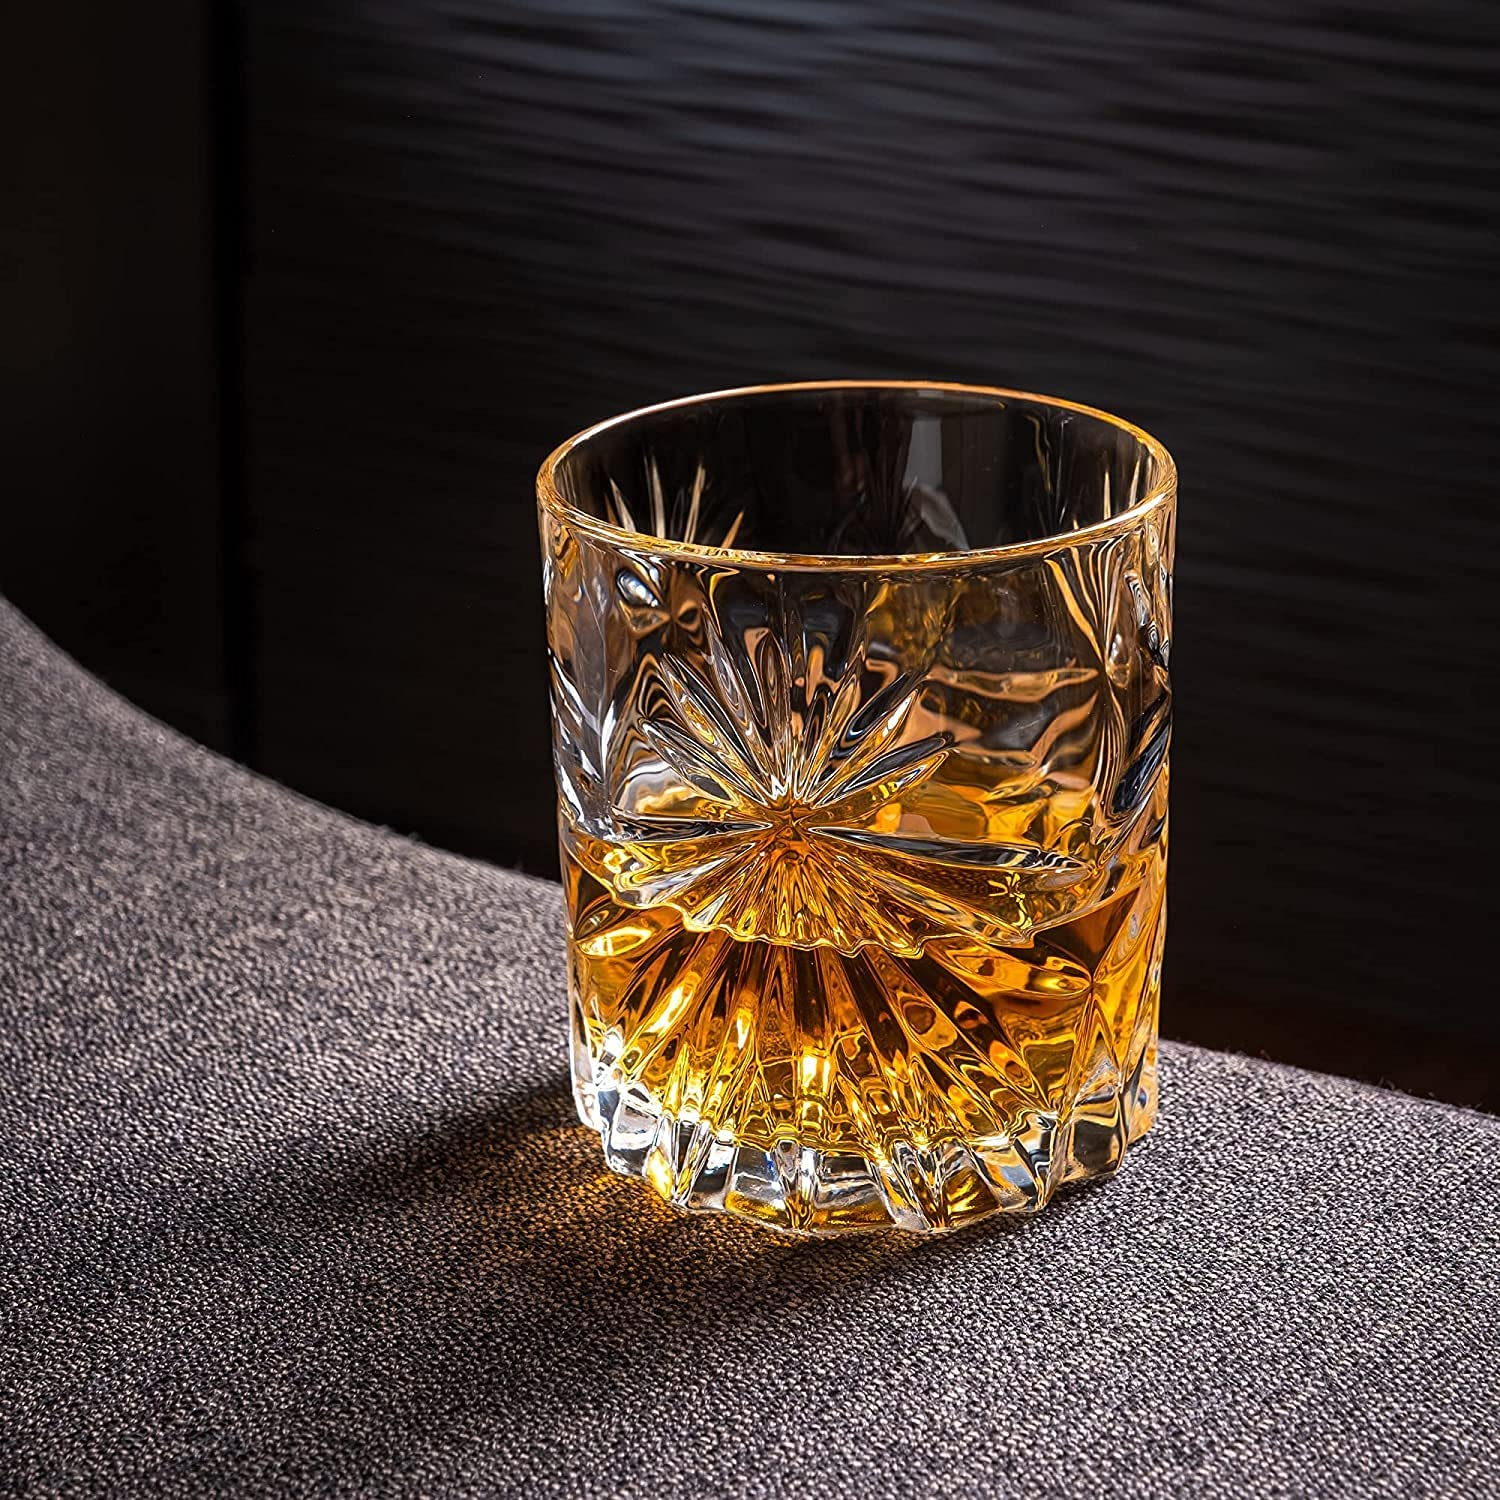 Whiskey Stones & Crystal Glass Gift Set - Soleil Tumbler (11.7oz), Goodies N Stuff